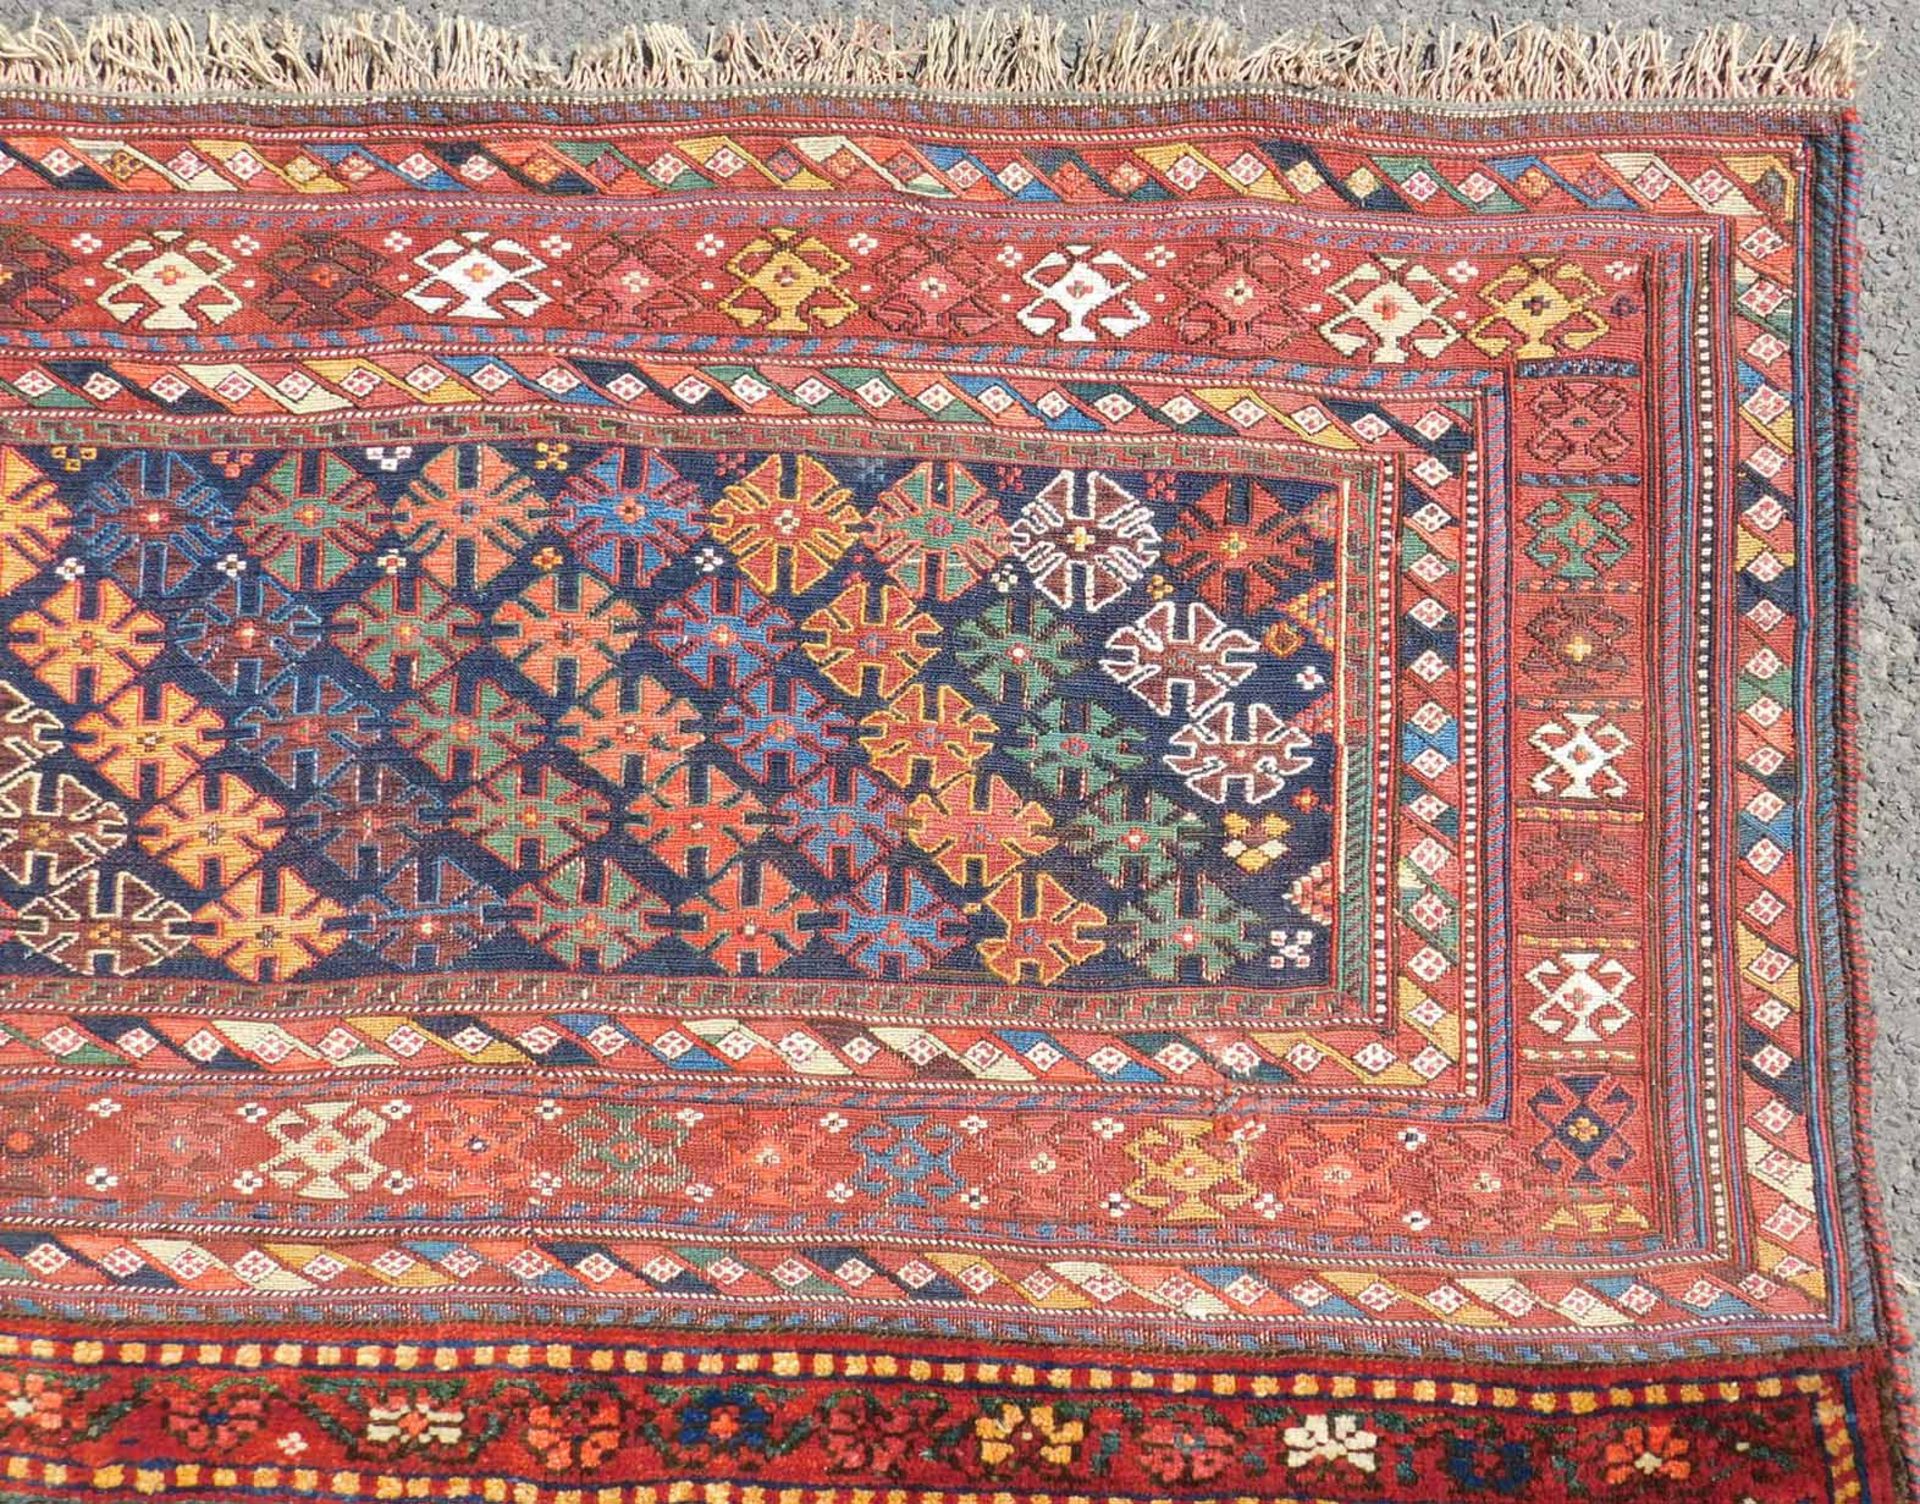 Shah - Savan Persian rug. Pocket front. Iran. Antique, around 1900.94 cm x 132 cm. One side hand- - Image 5 of 7